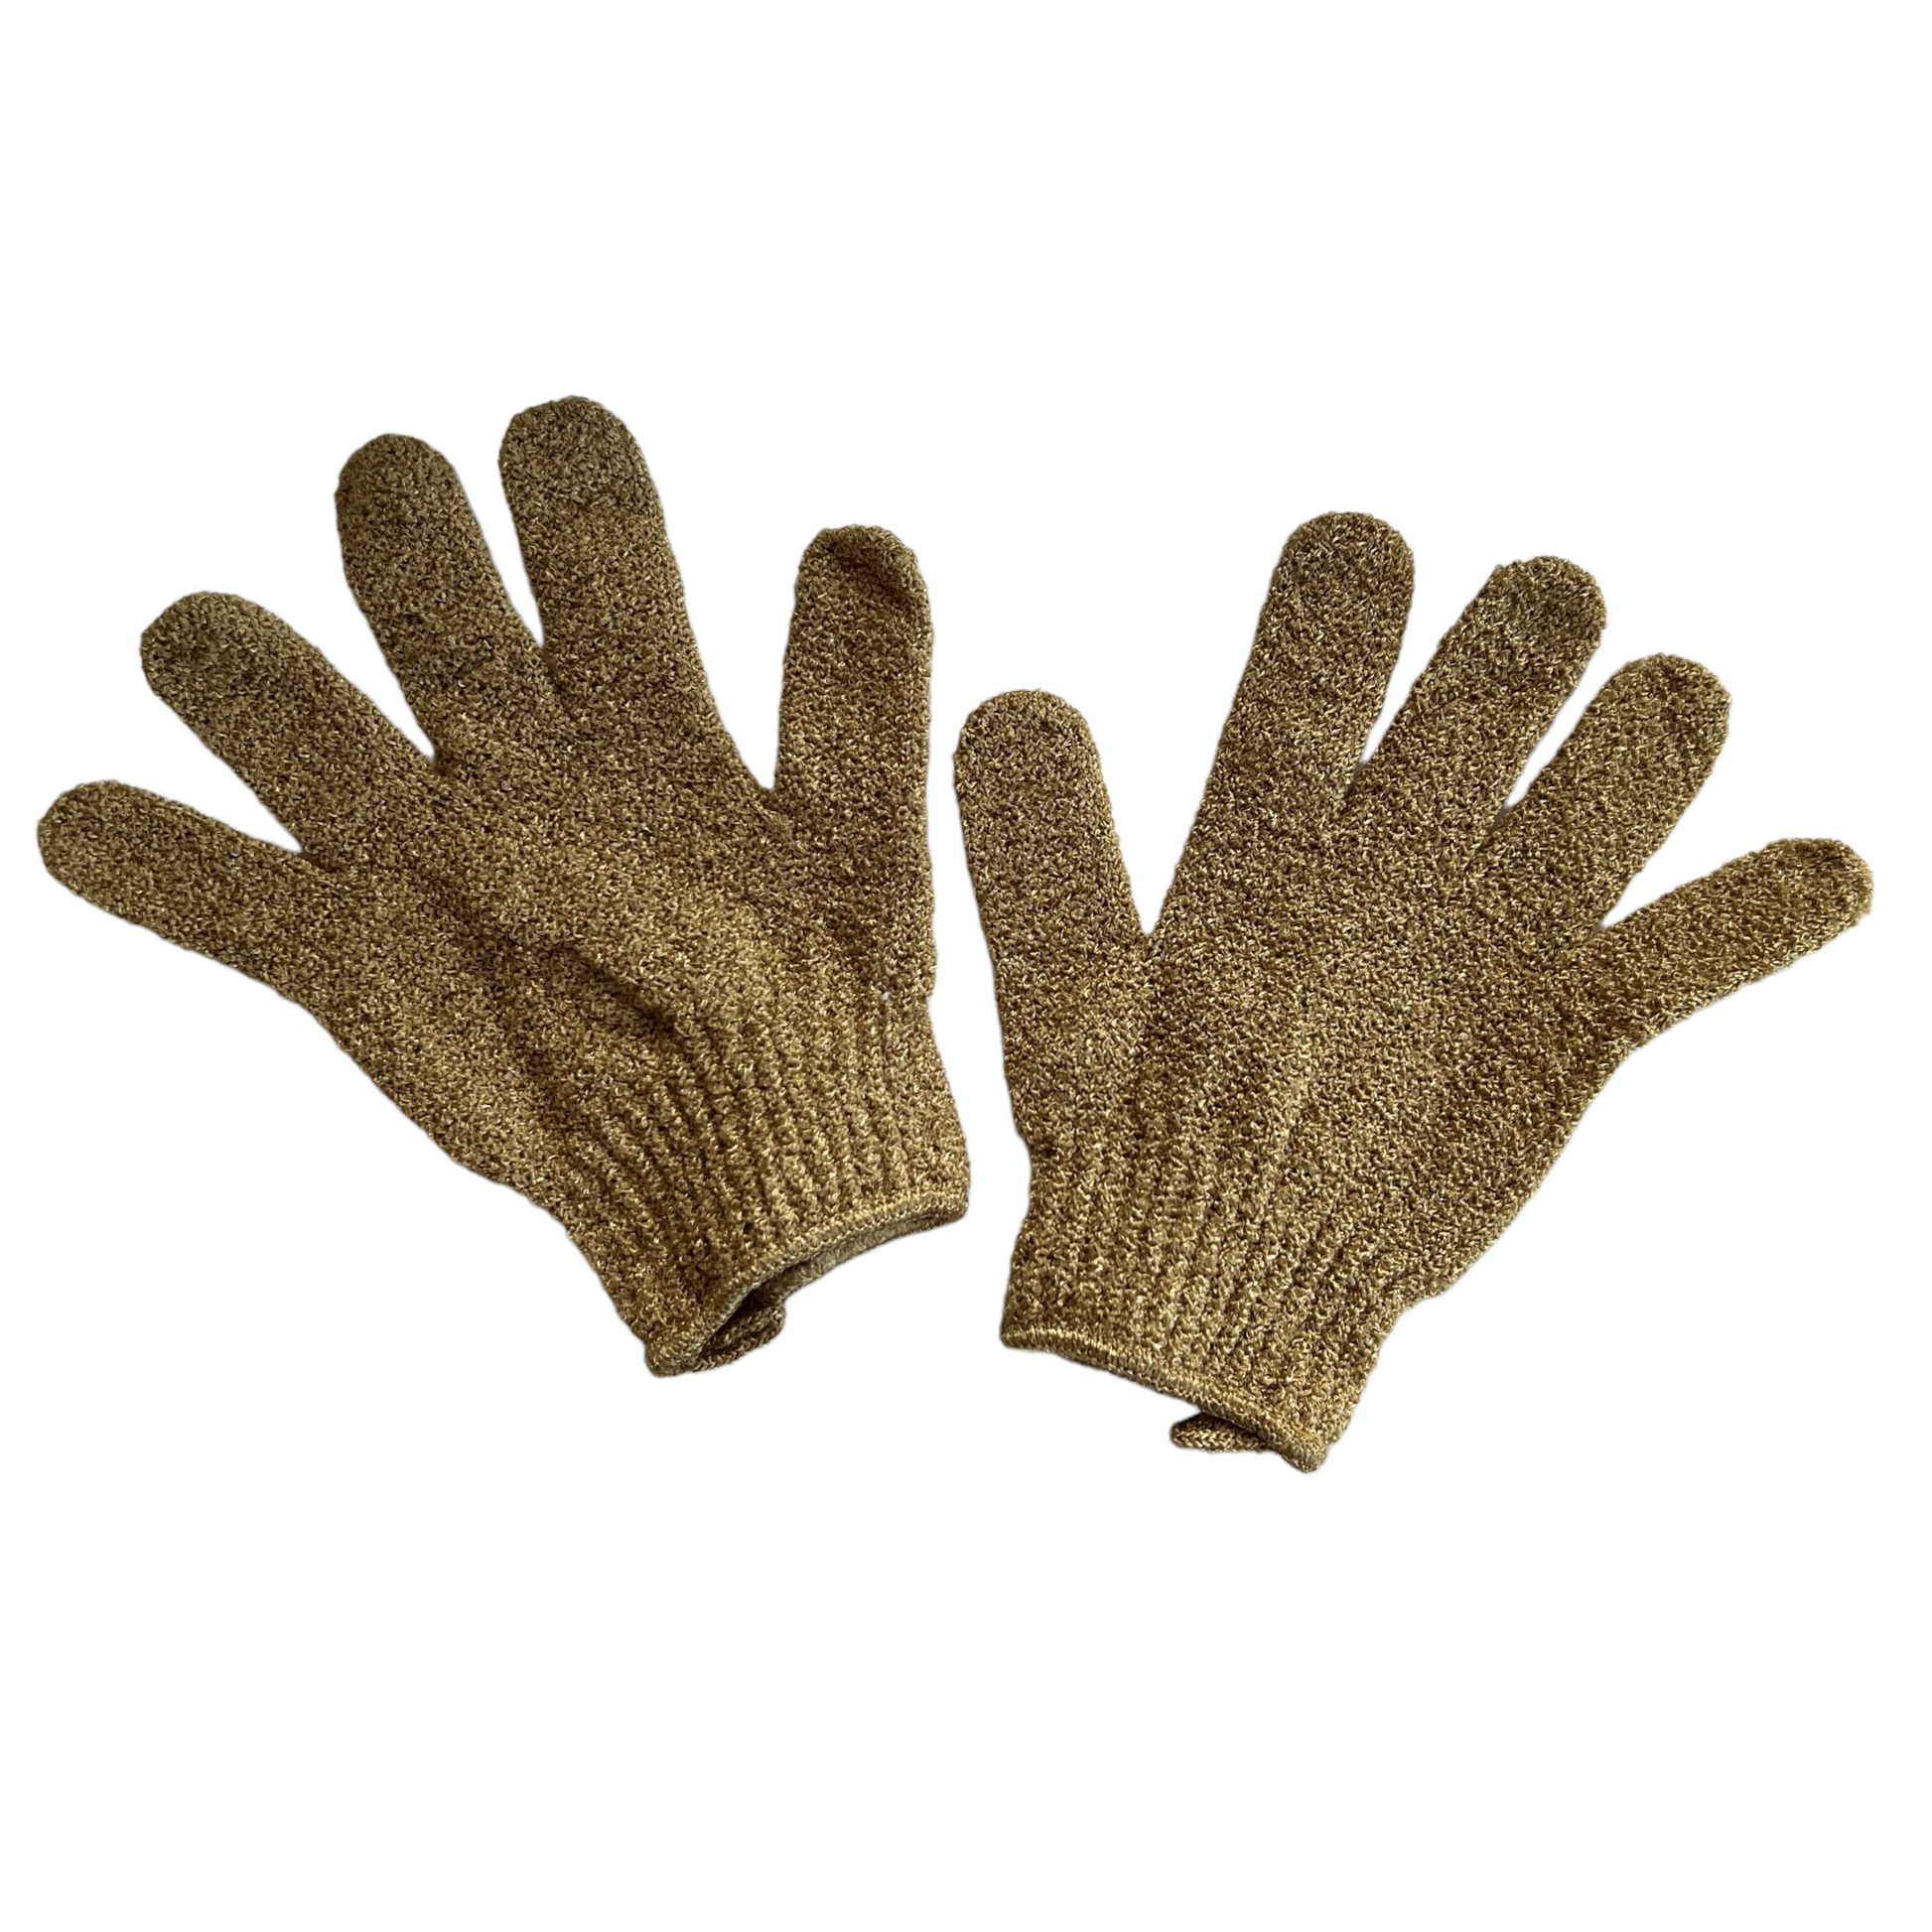 Quick Potato Peeling Gloves  SPIRIT SPARKPLUGS Gold  